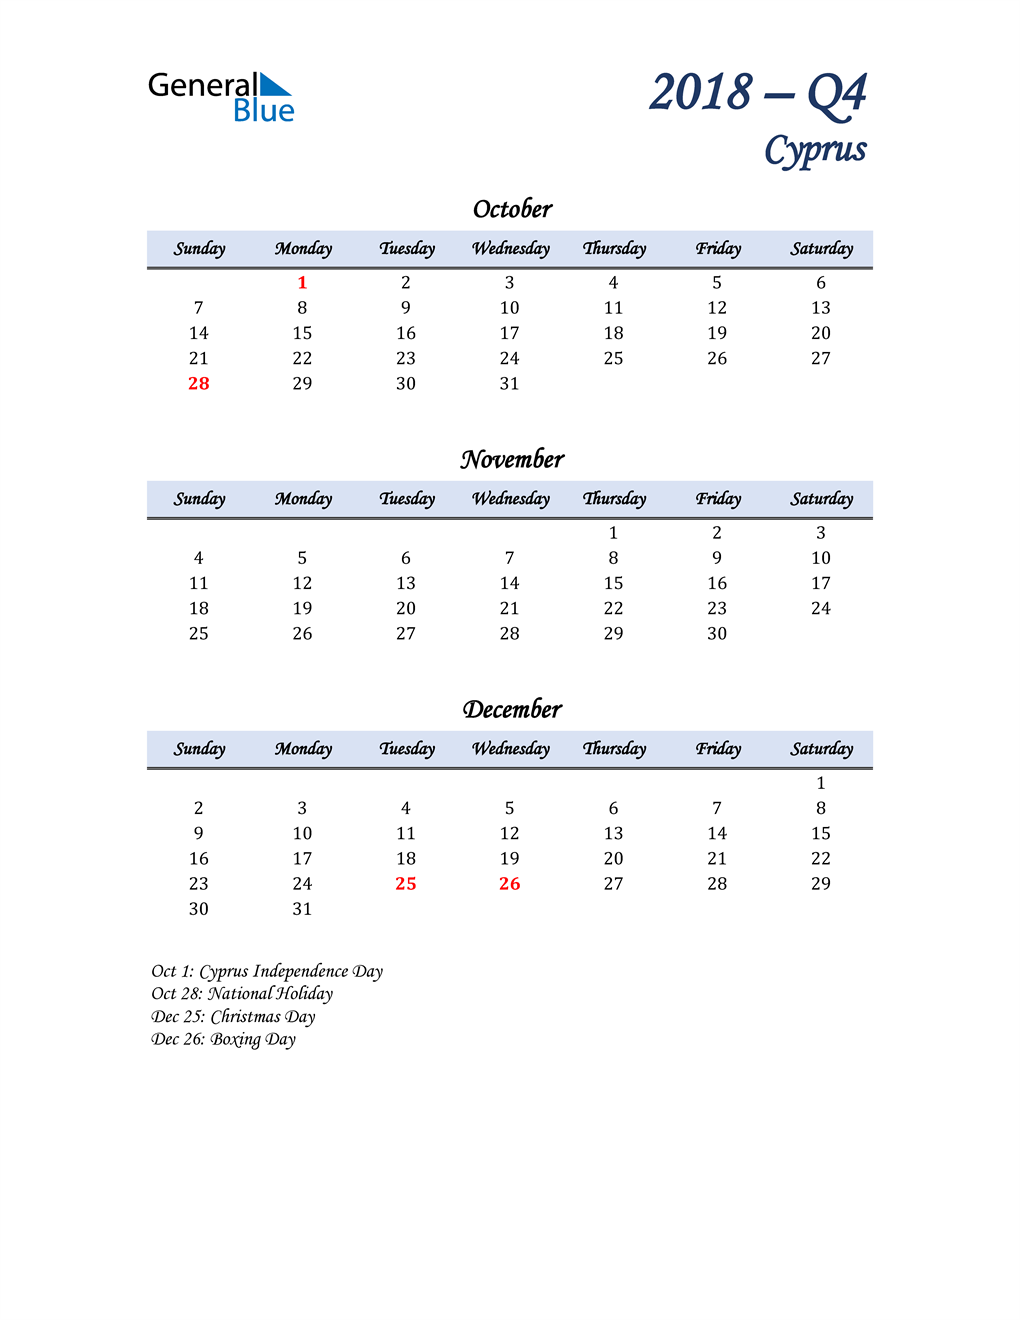  October, November, and December Calendar for Cyprus